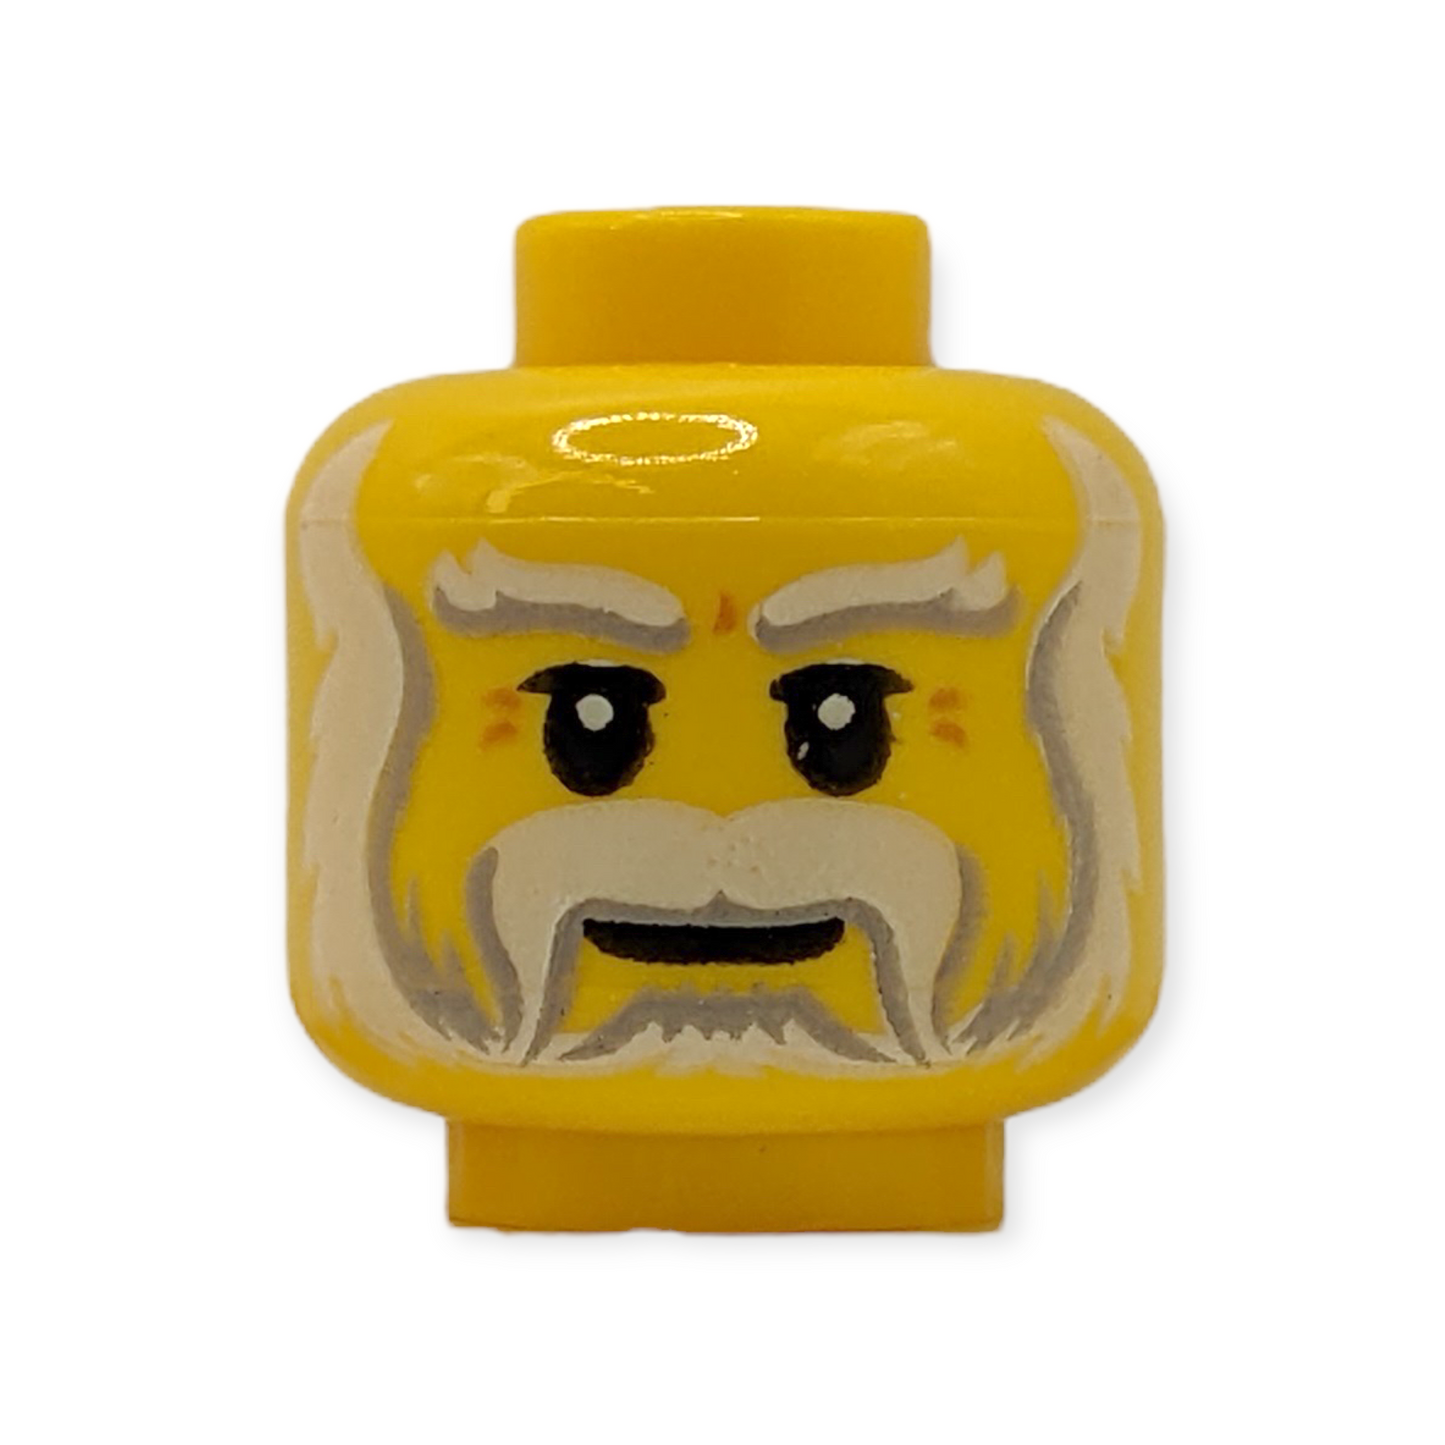 LEGO Head - 3555 Beard Light Bluish Gray